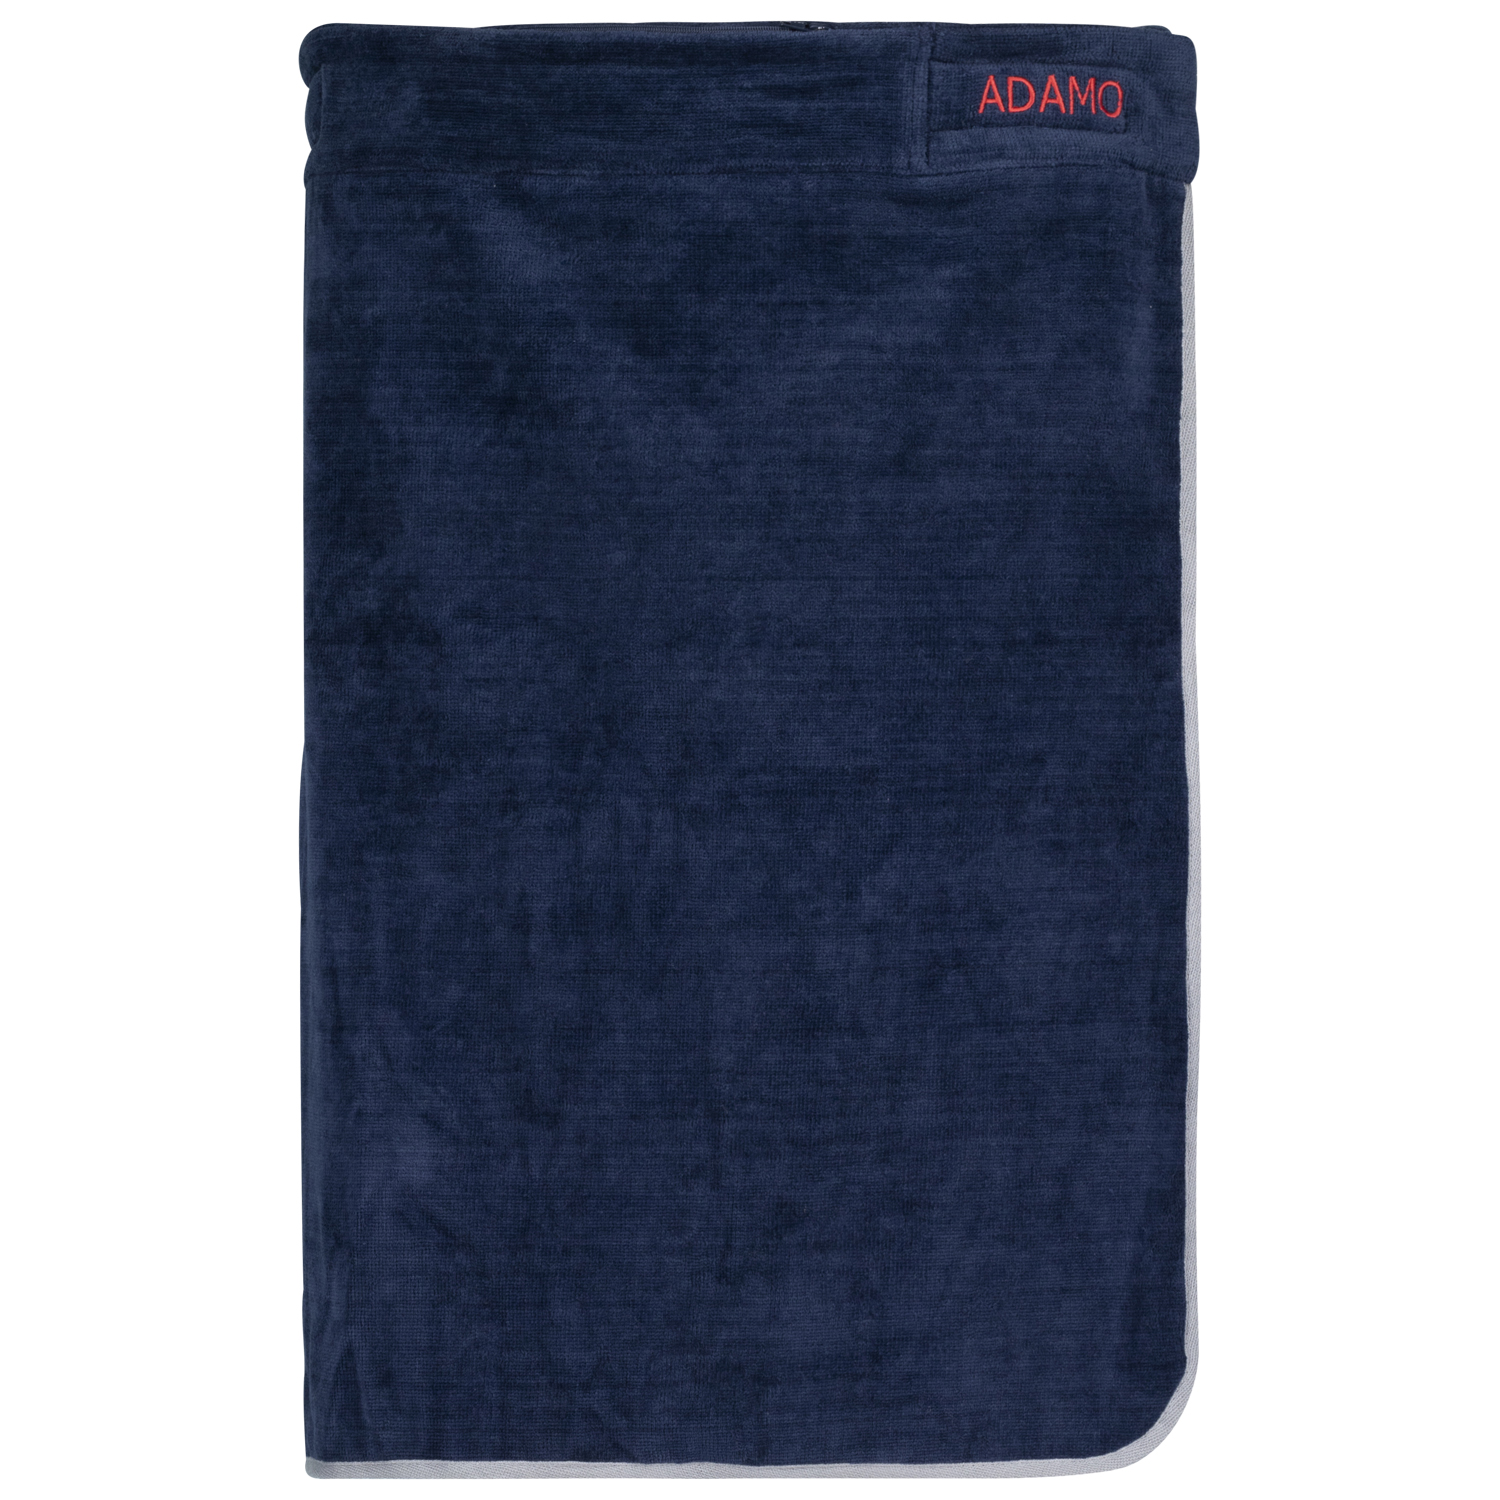 ADAMO XXL sauna kilt dark blue model "LATHI" for men in oversize with velcro closure